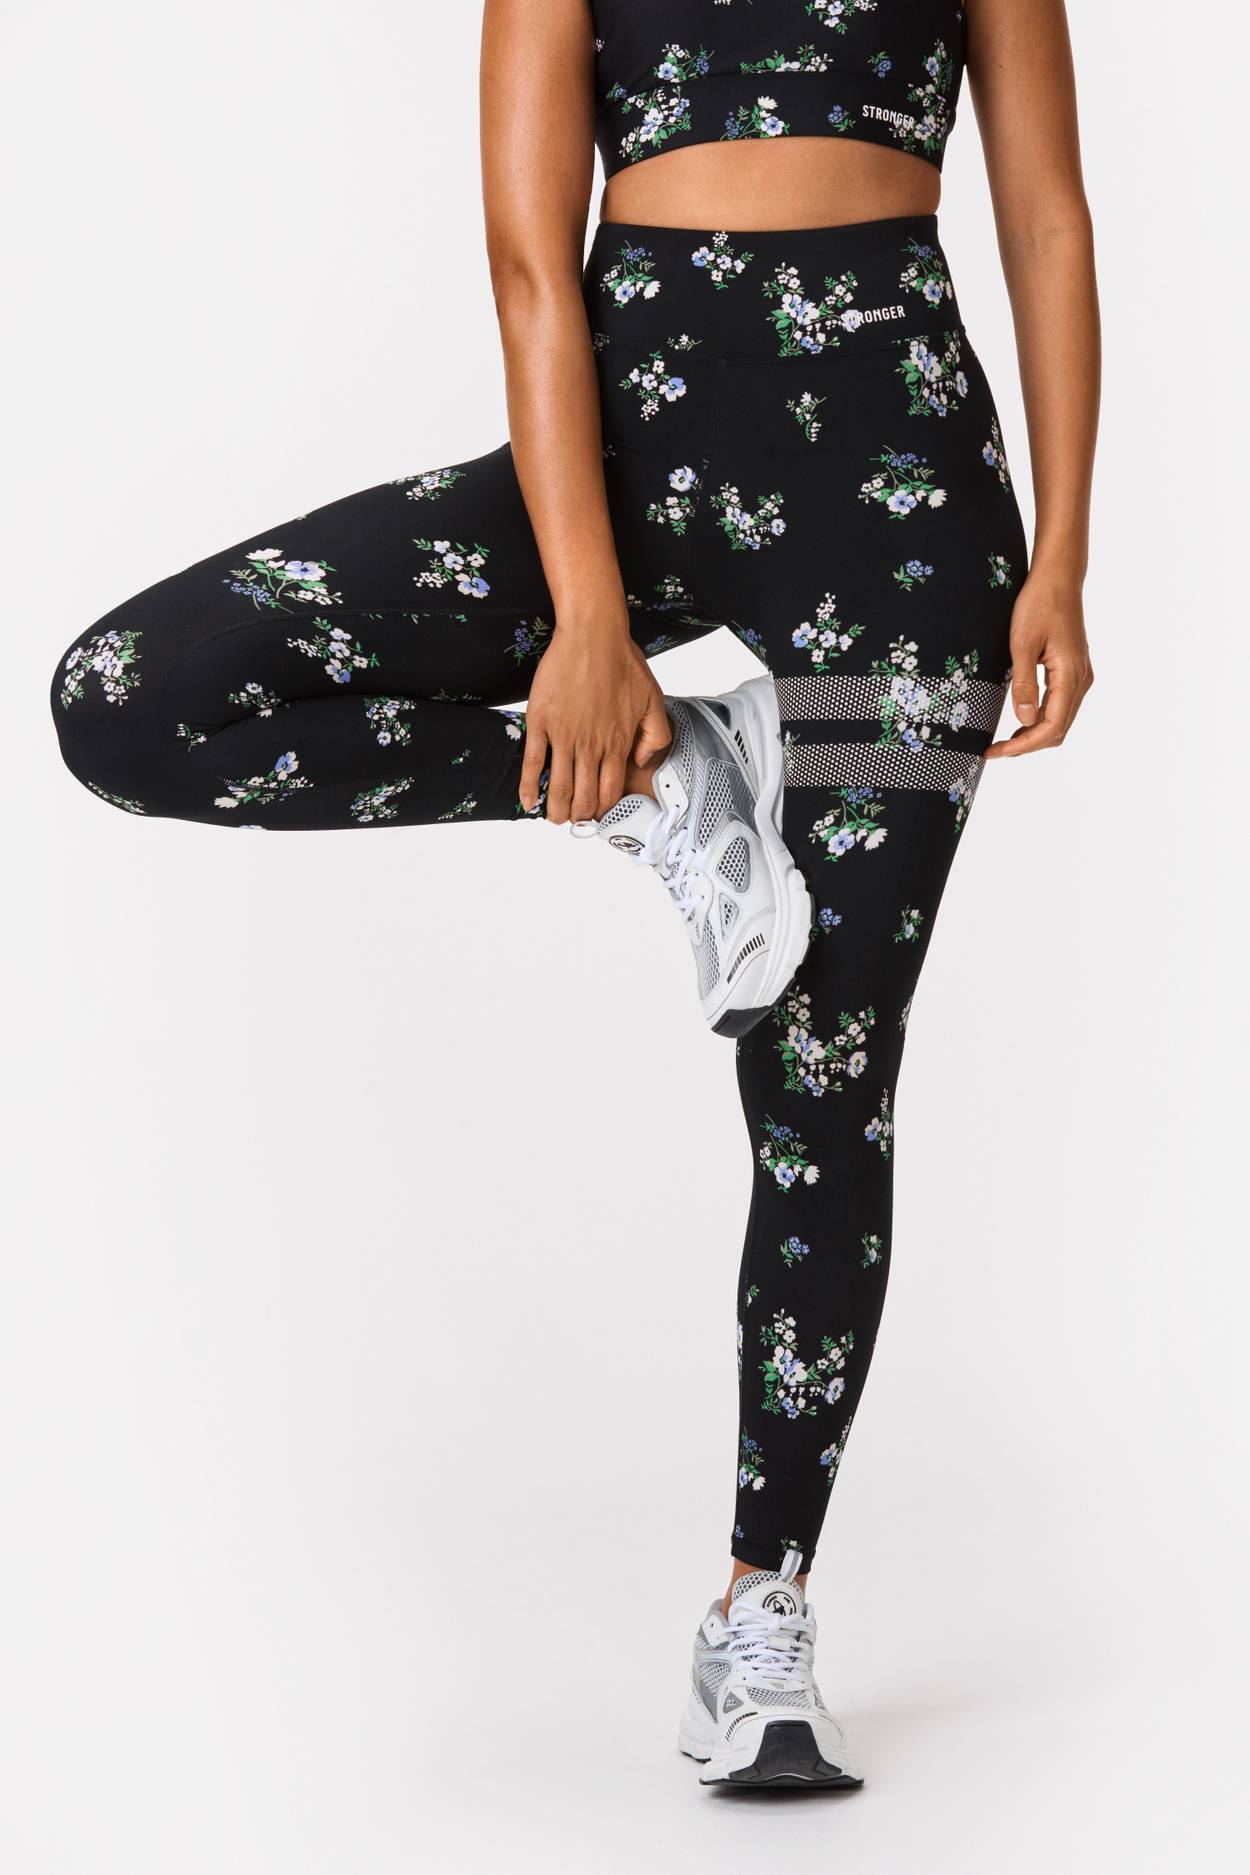 Footless Yoga Pants Printed Leggings Cute Leggings Pop Fashion Womens 